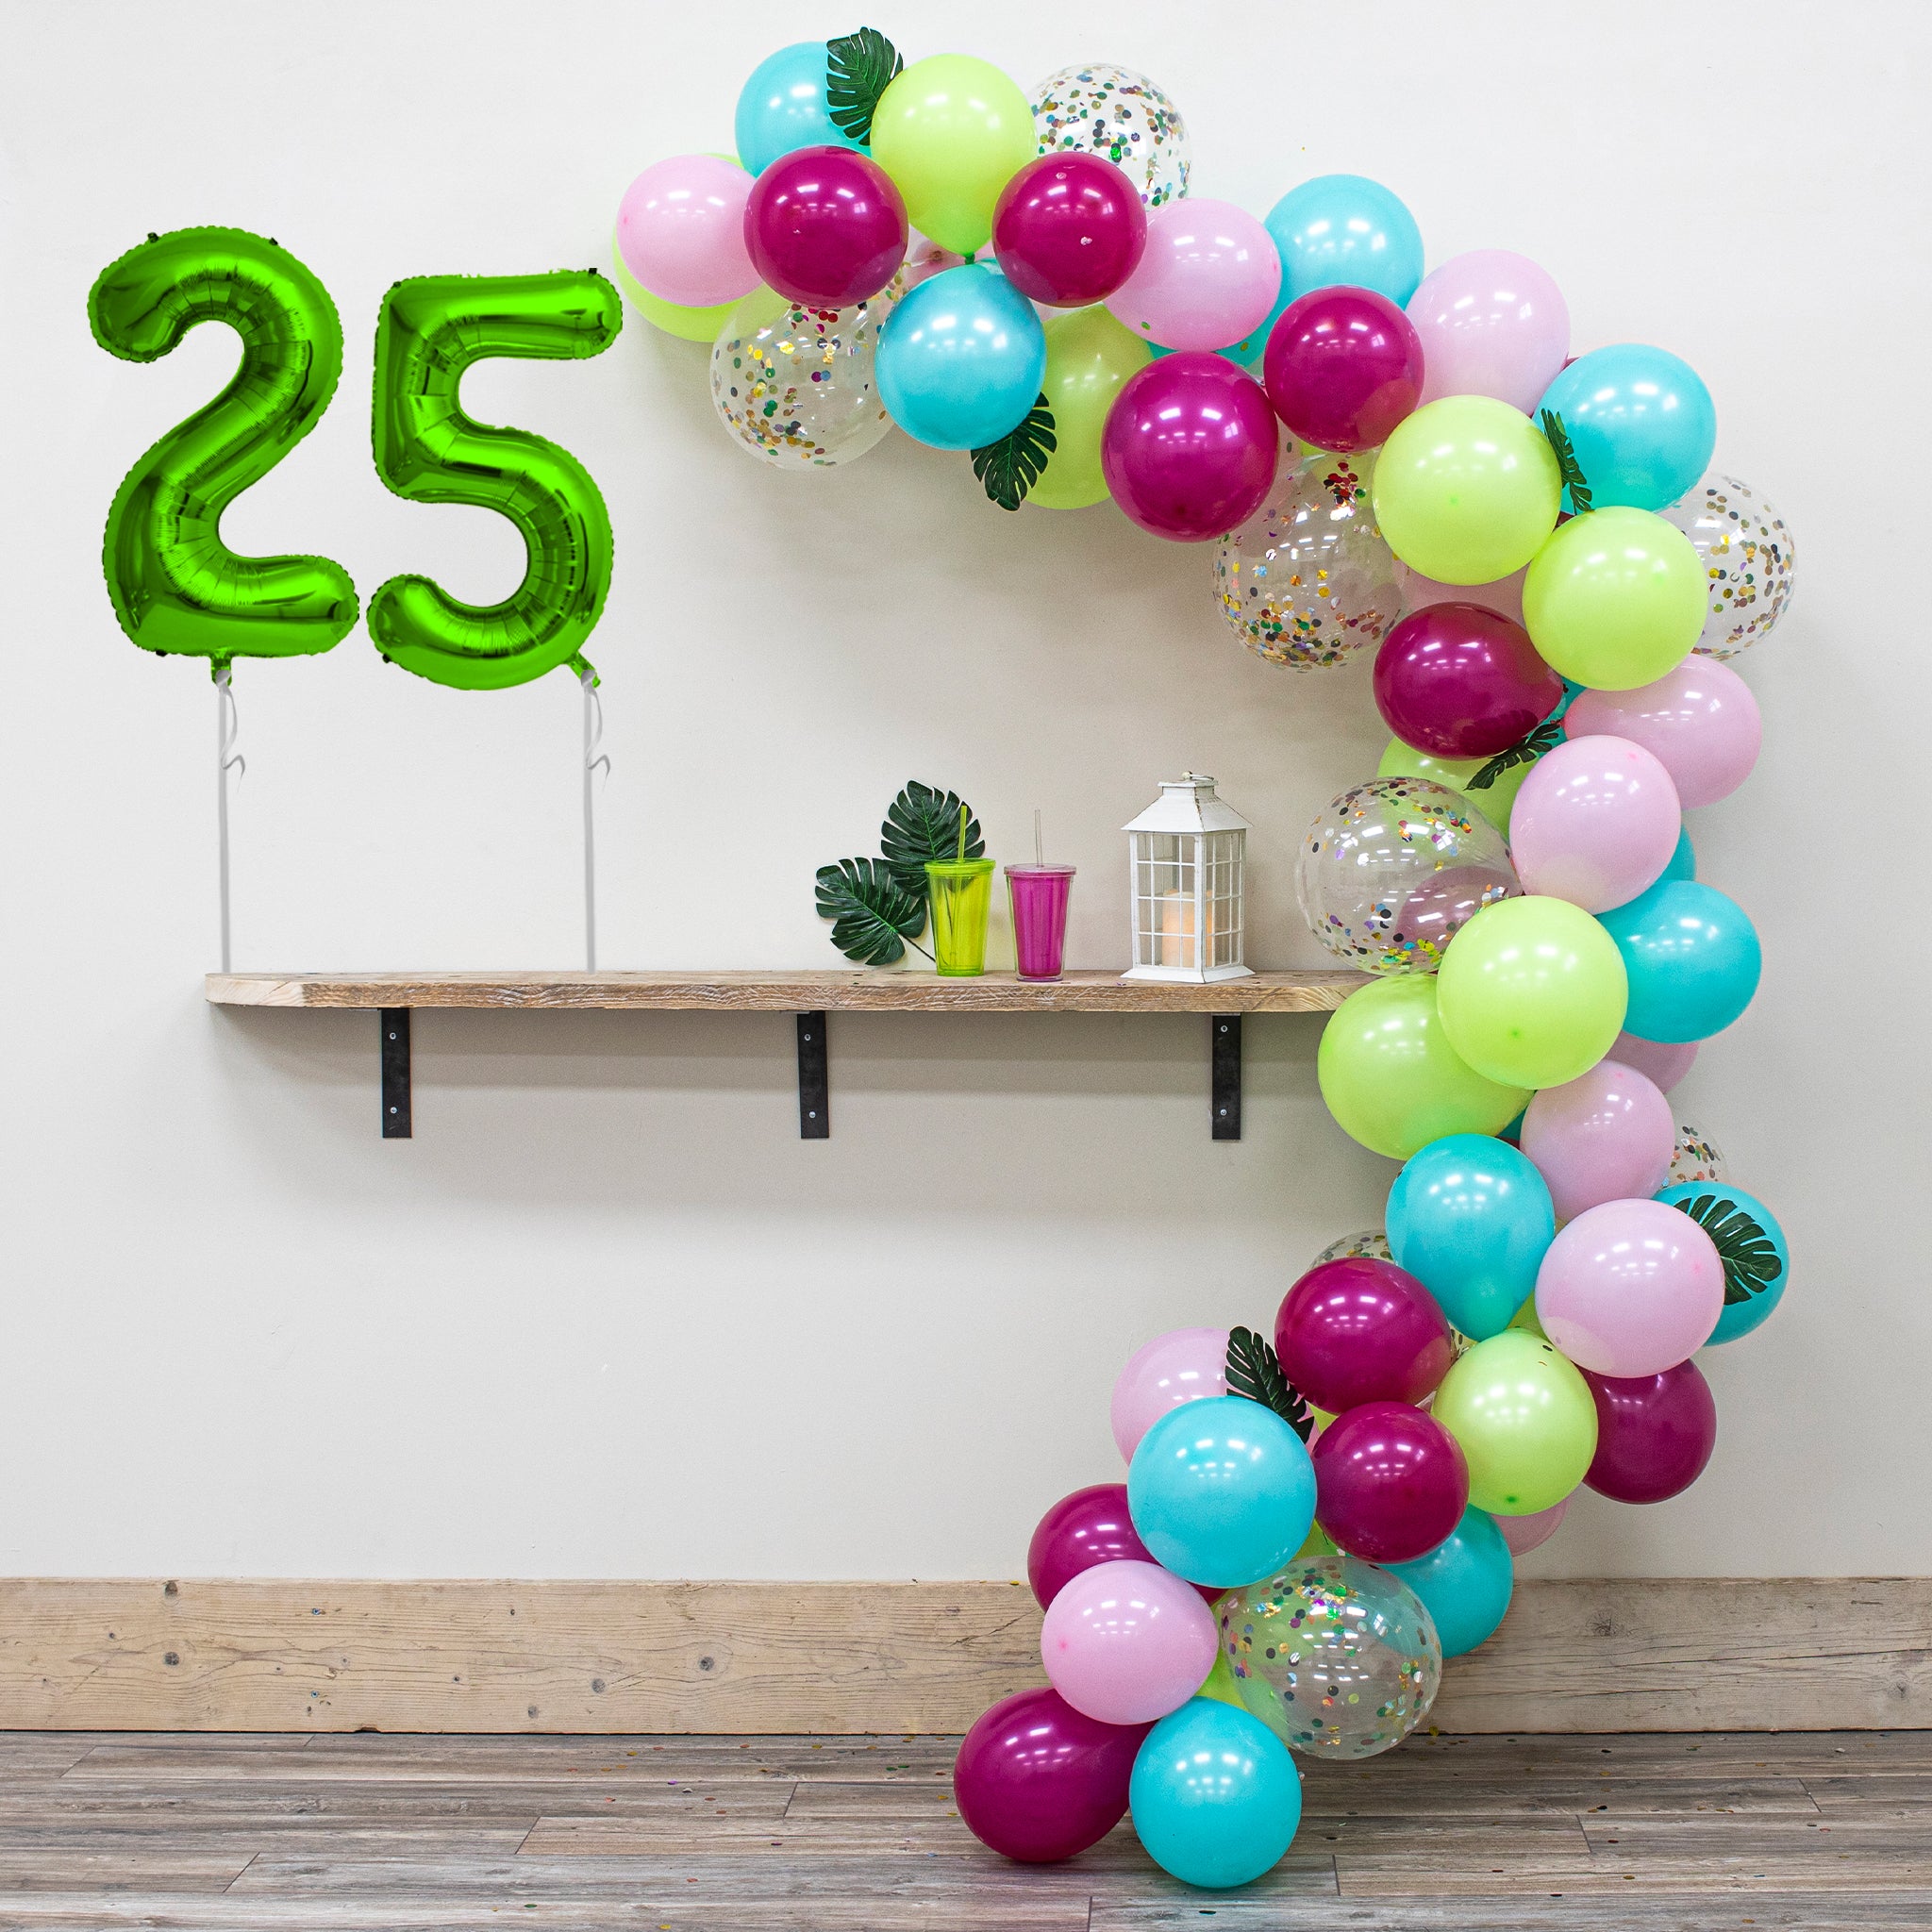 25th Birthday Hawaiian Tiki Party Balloon Arch Decoration Kit - Includes 70+ Balloons